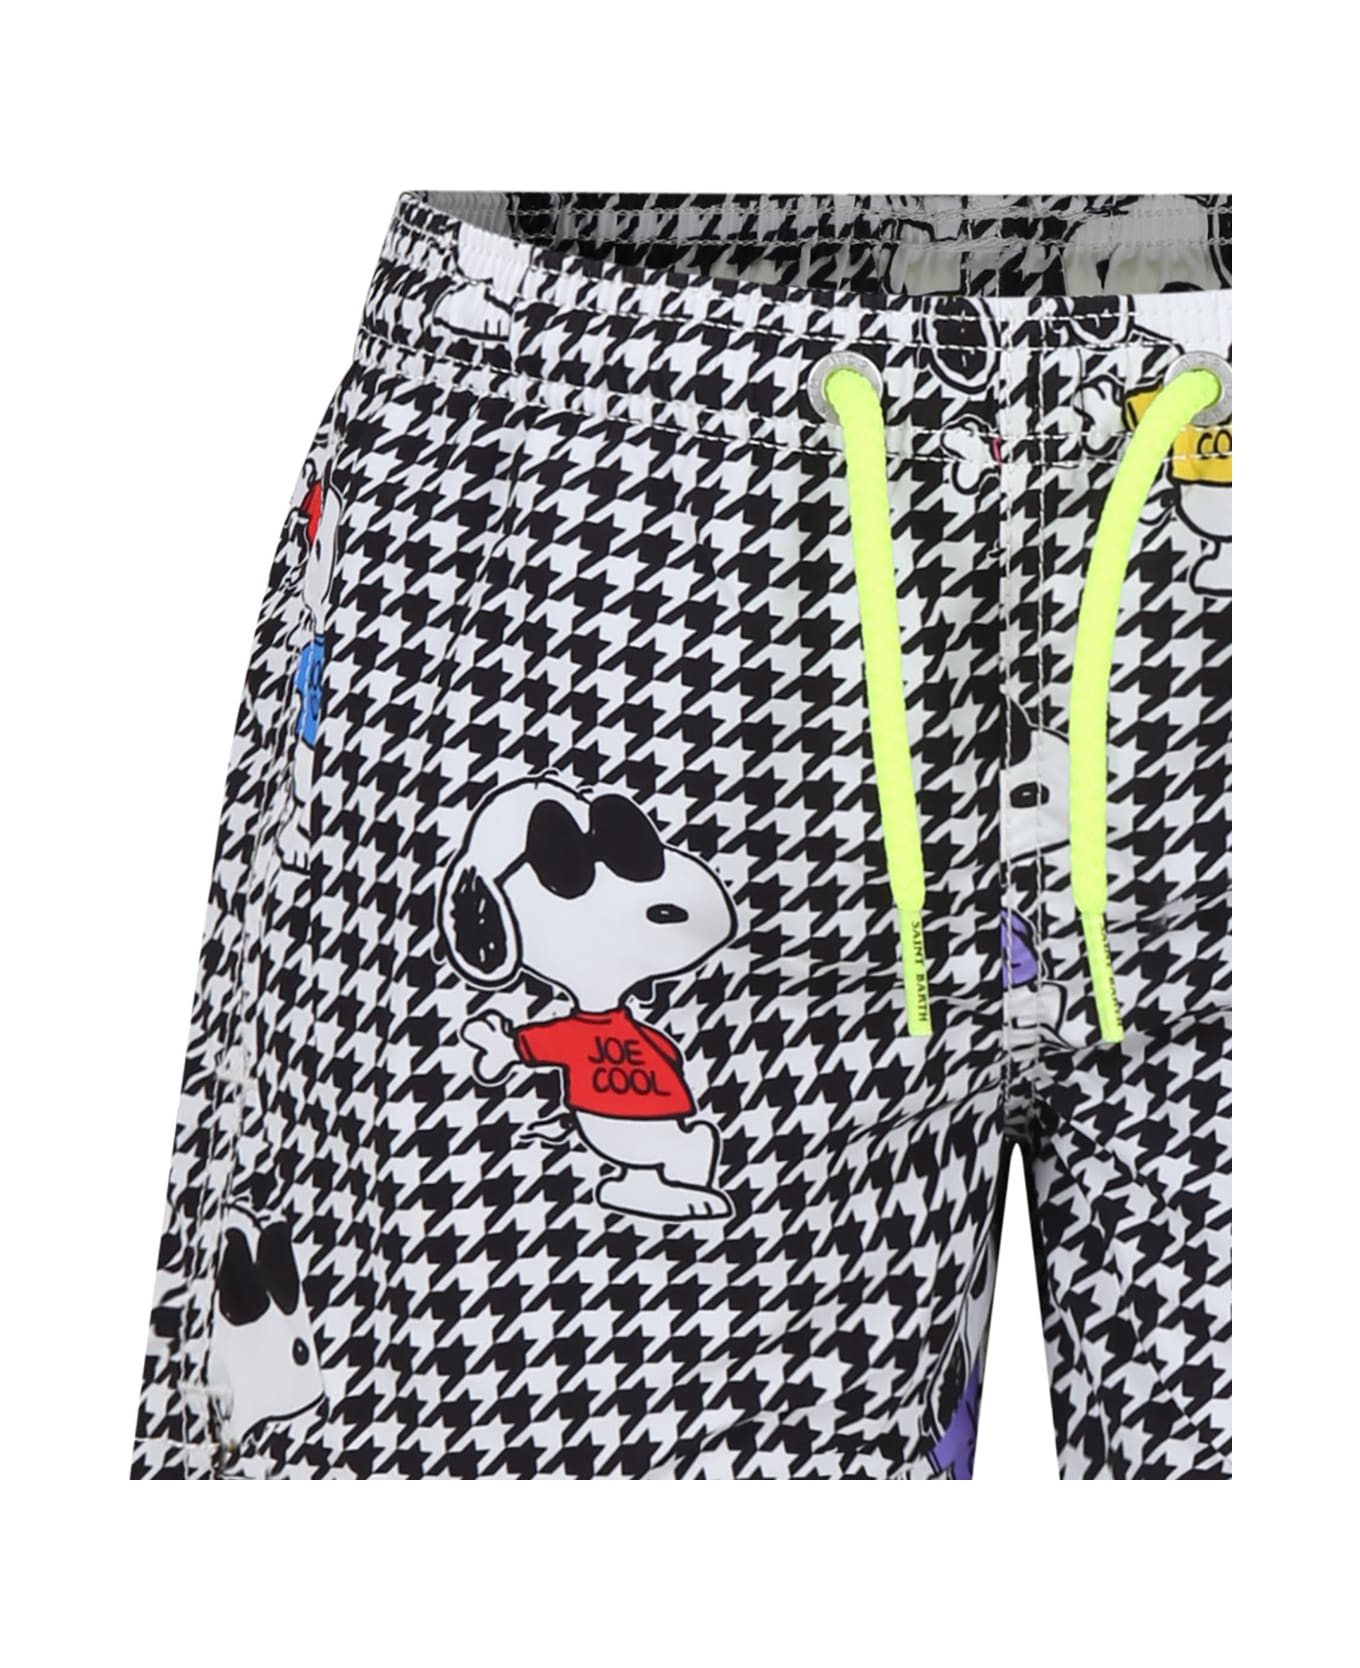 MC2 Saint Barth Black Swim Shorts For Boy With Snoopy - Multicolor 水着